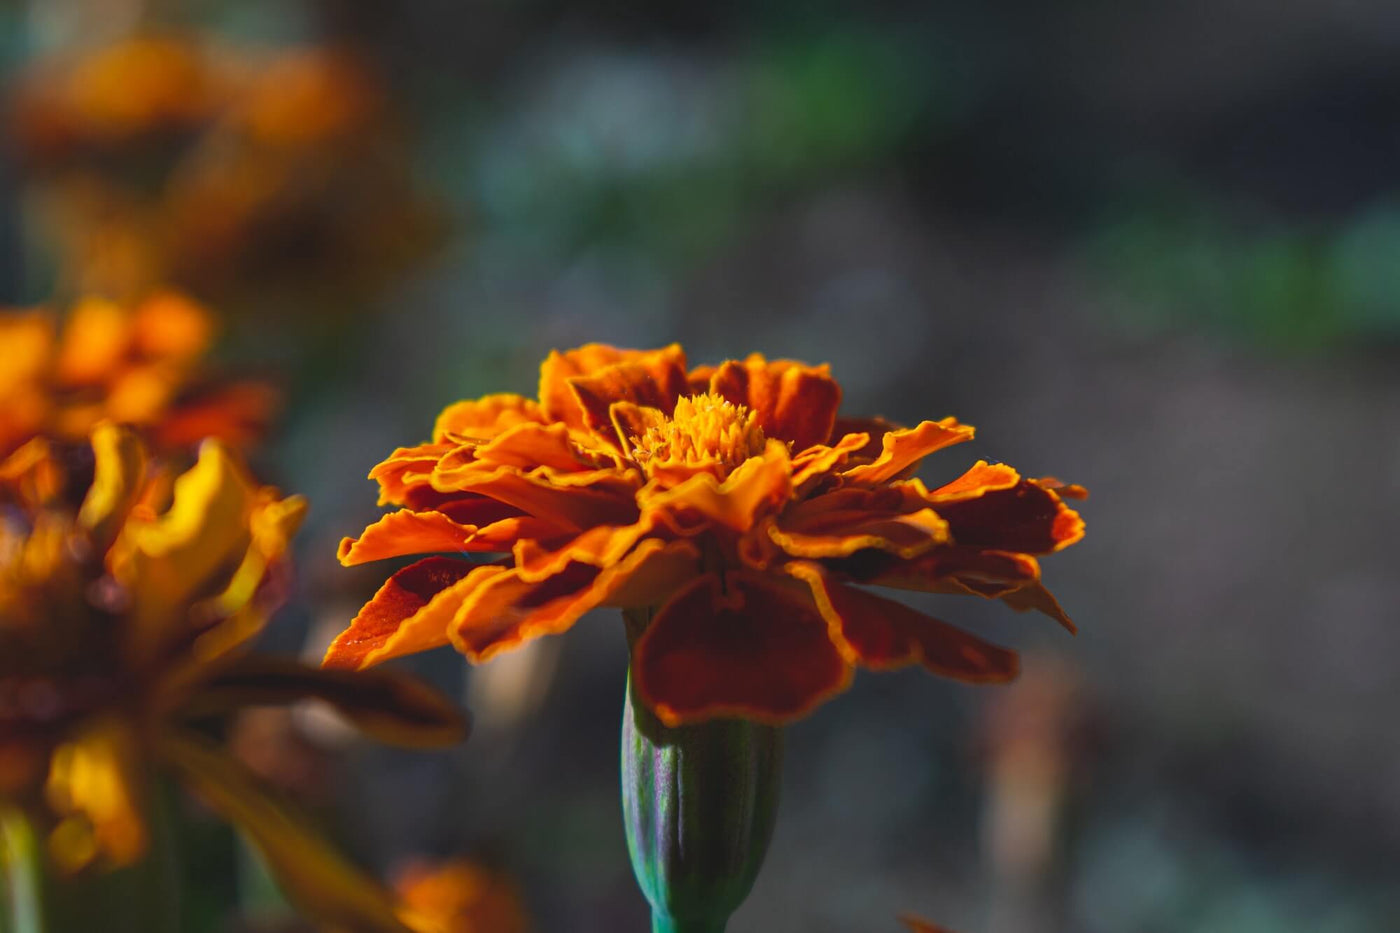 Marigold Seeds grown into full marigold flower